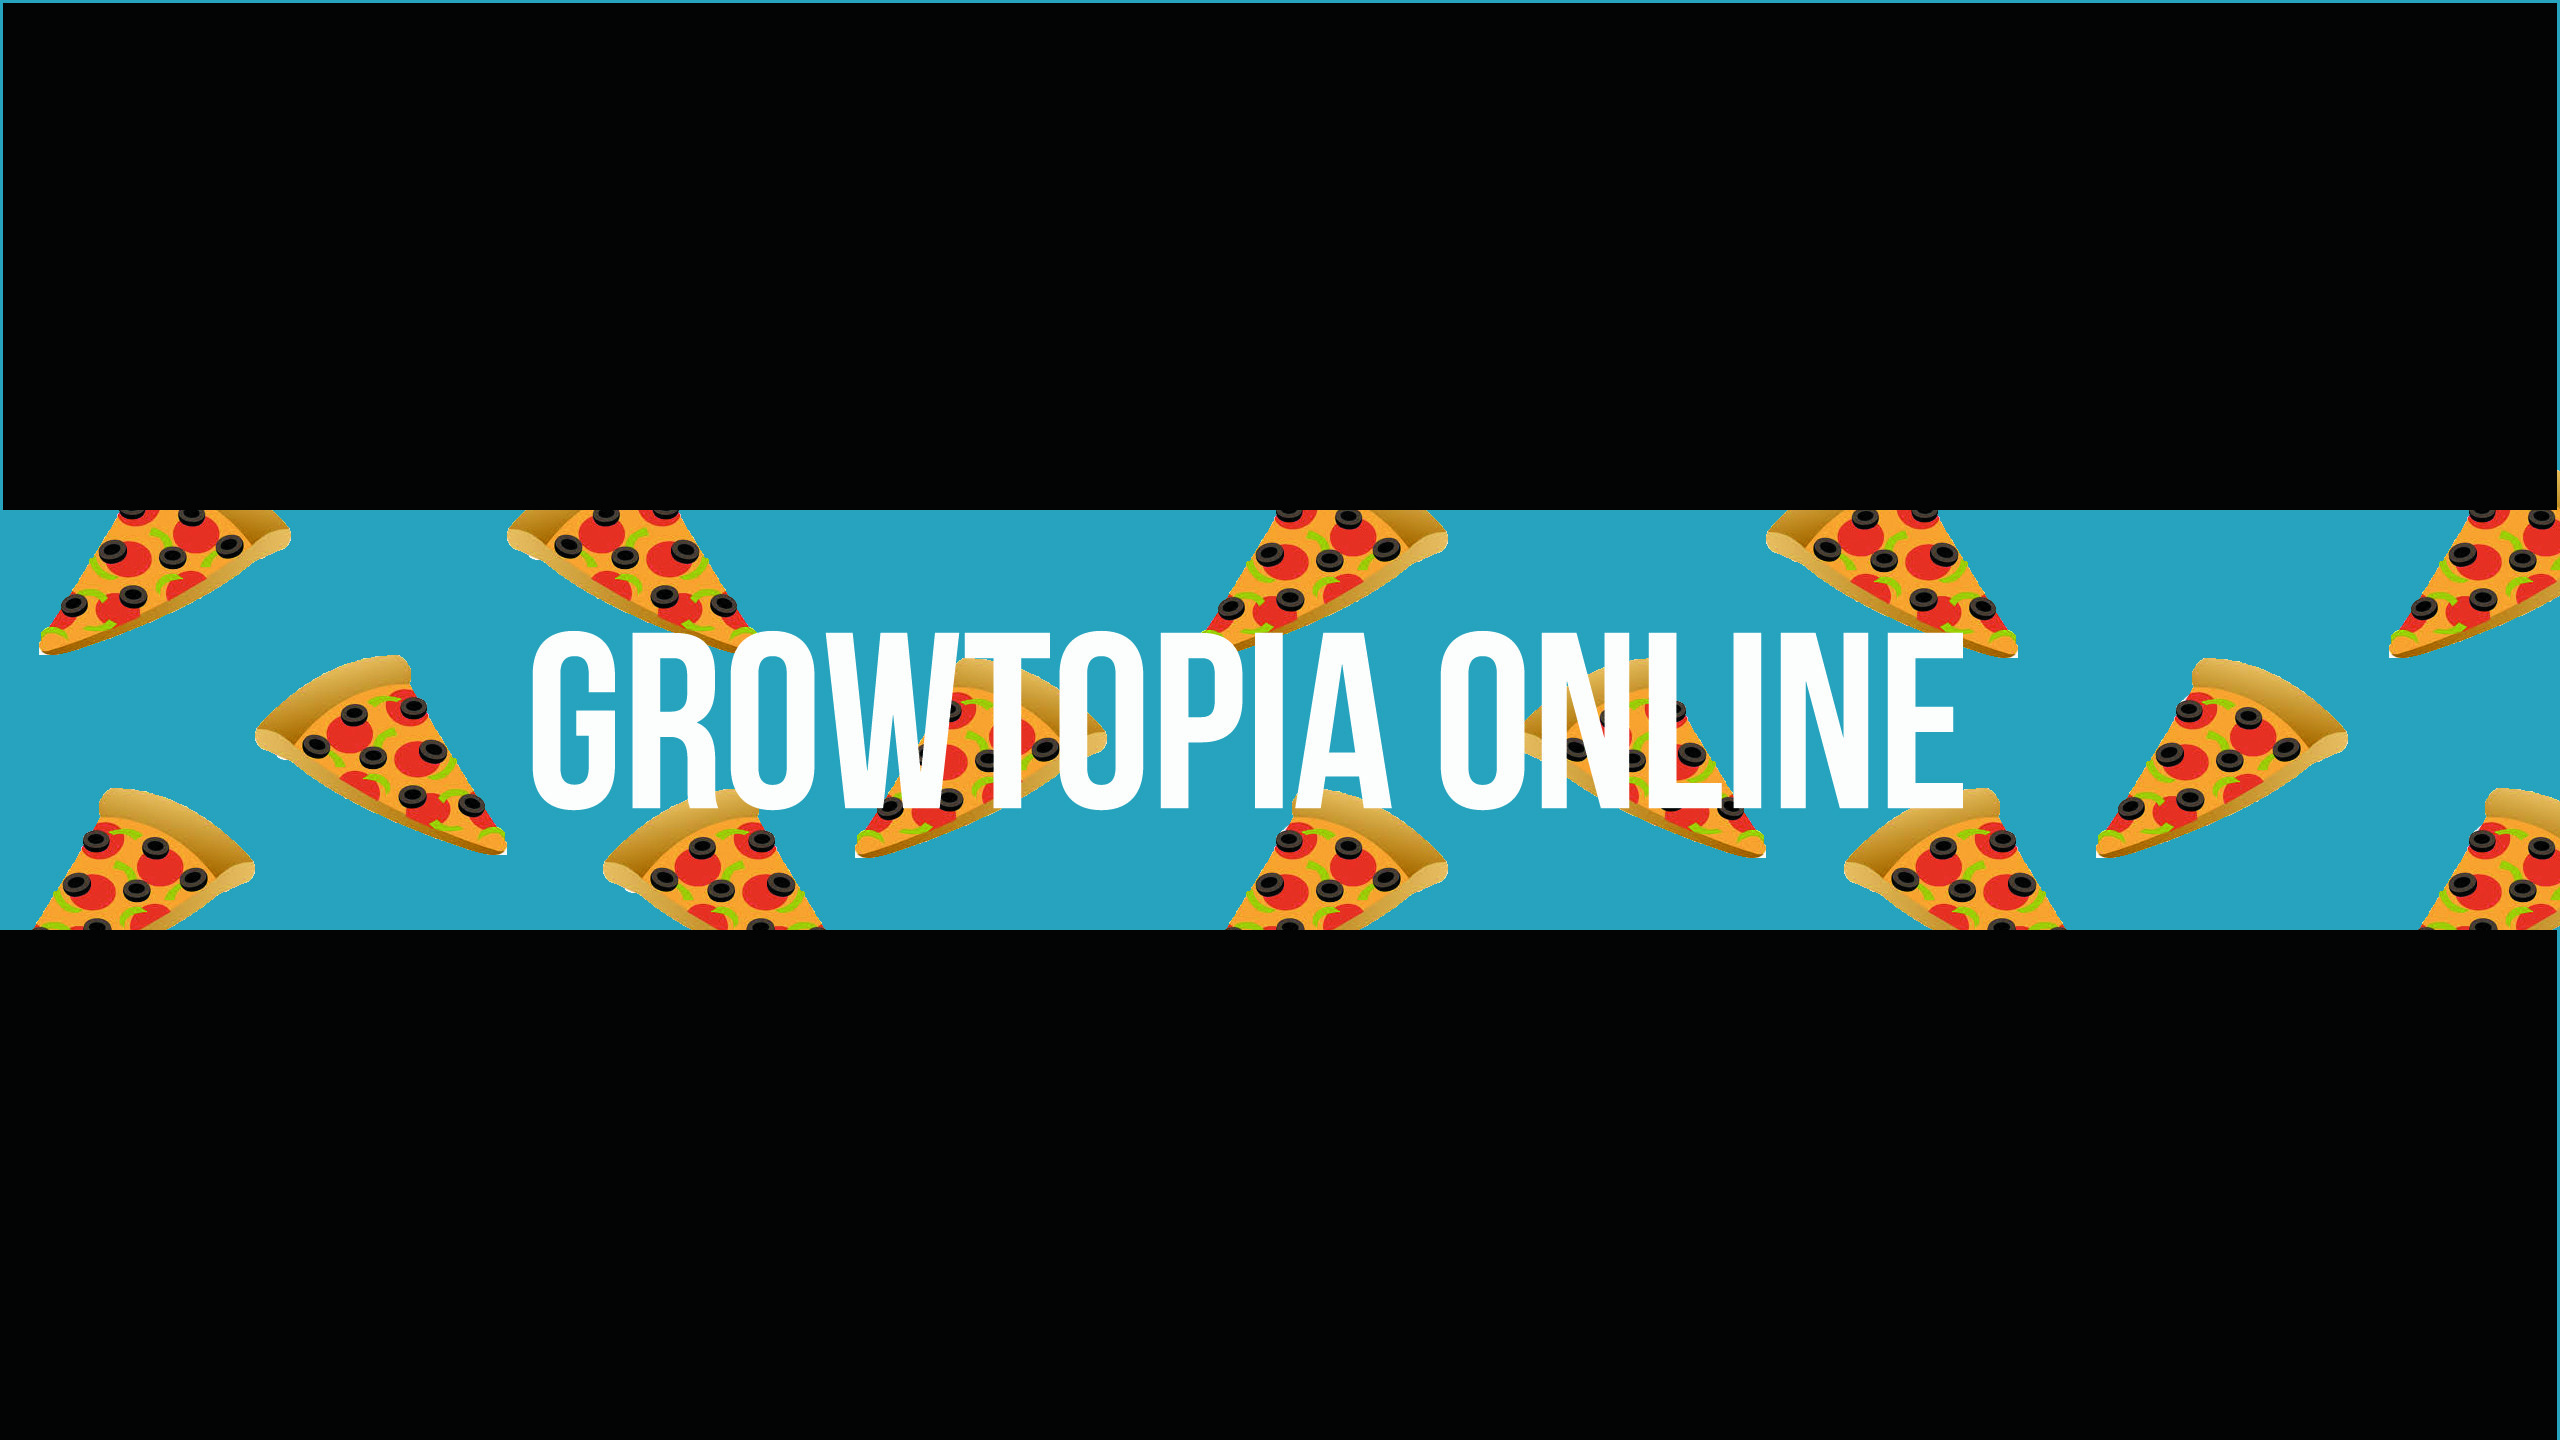 2560x1440 Name: Growtopia Online.jpg Views: 2338 Size: 1.05 MB